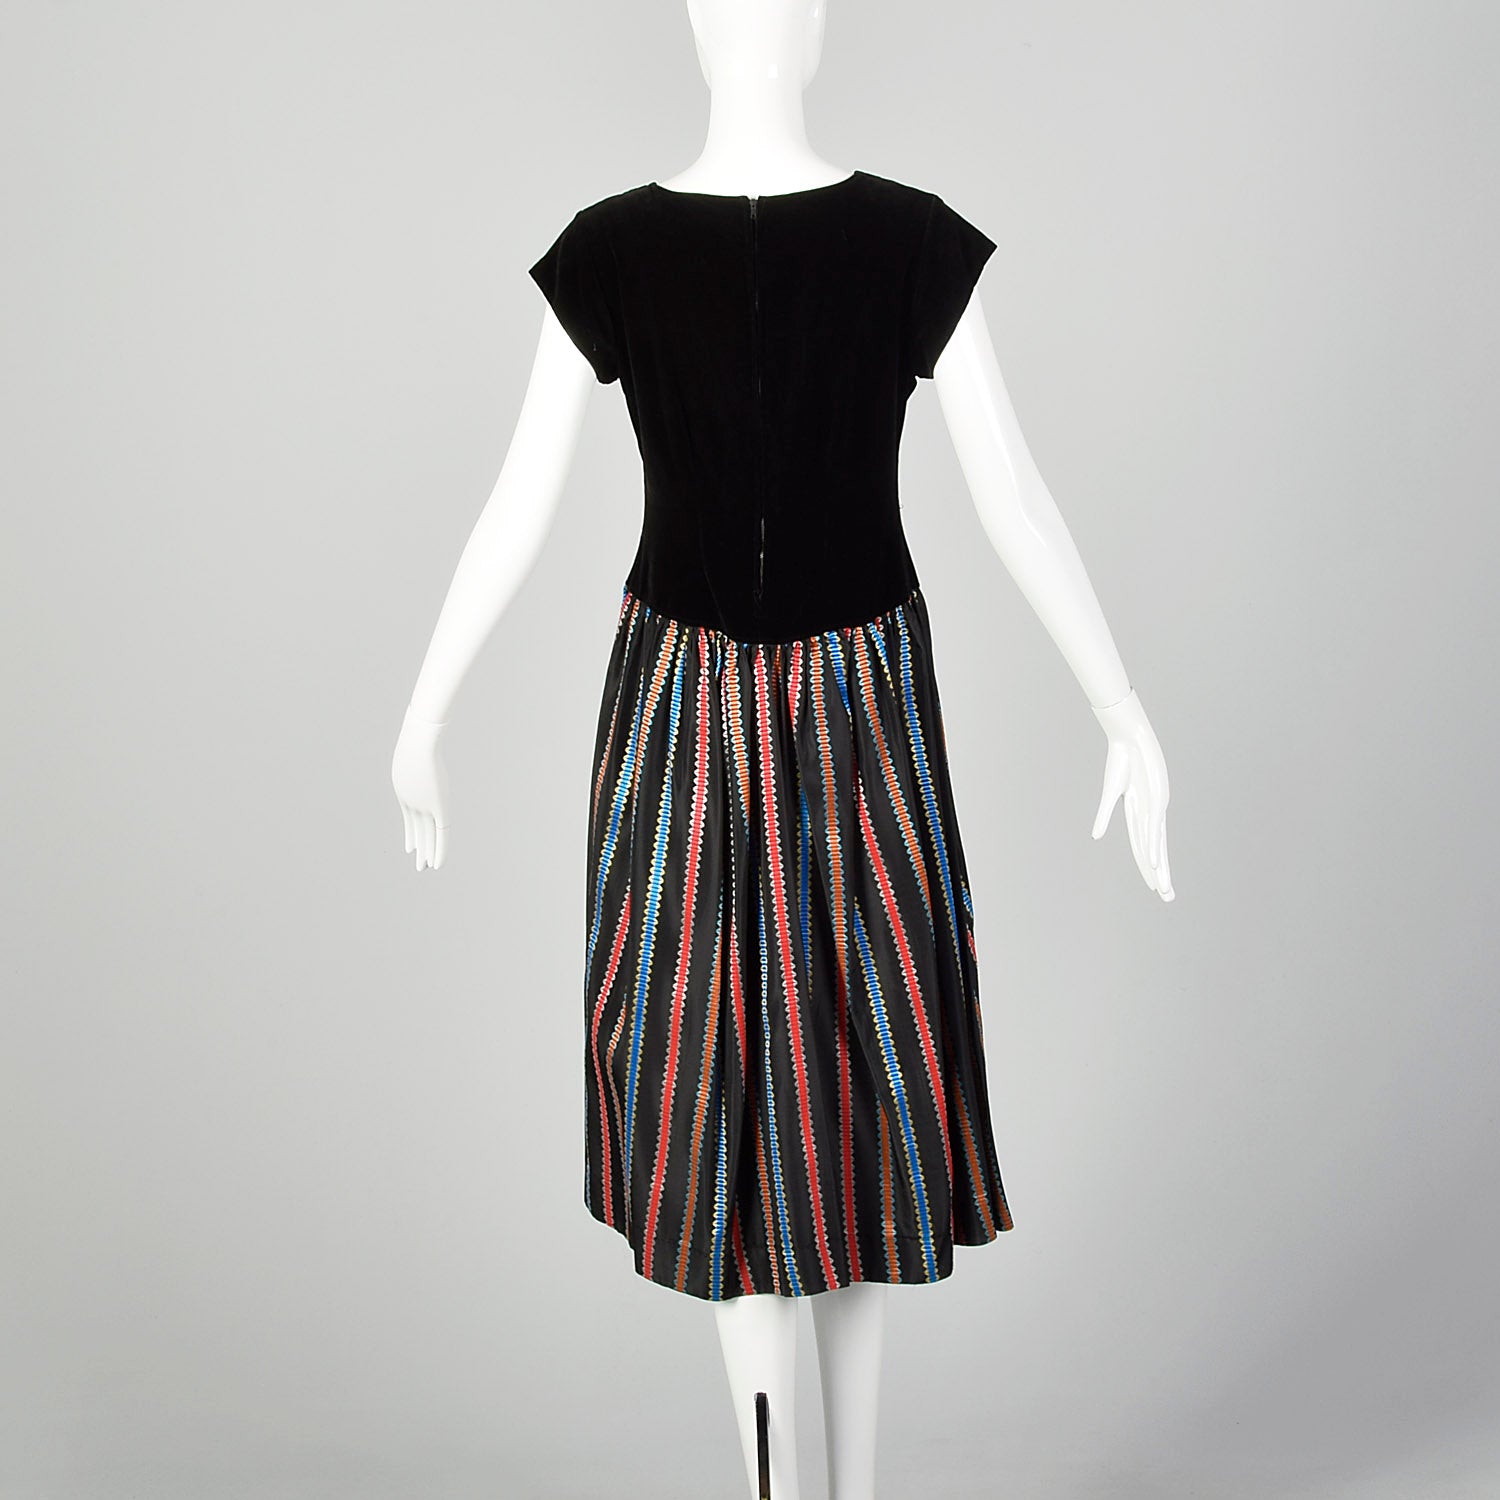 Medium 1950s Prom Dress Black Velvet Ribbon Stripe Taffeta Short Sleeve Prom Cocktail Evening